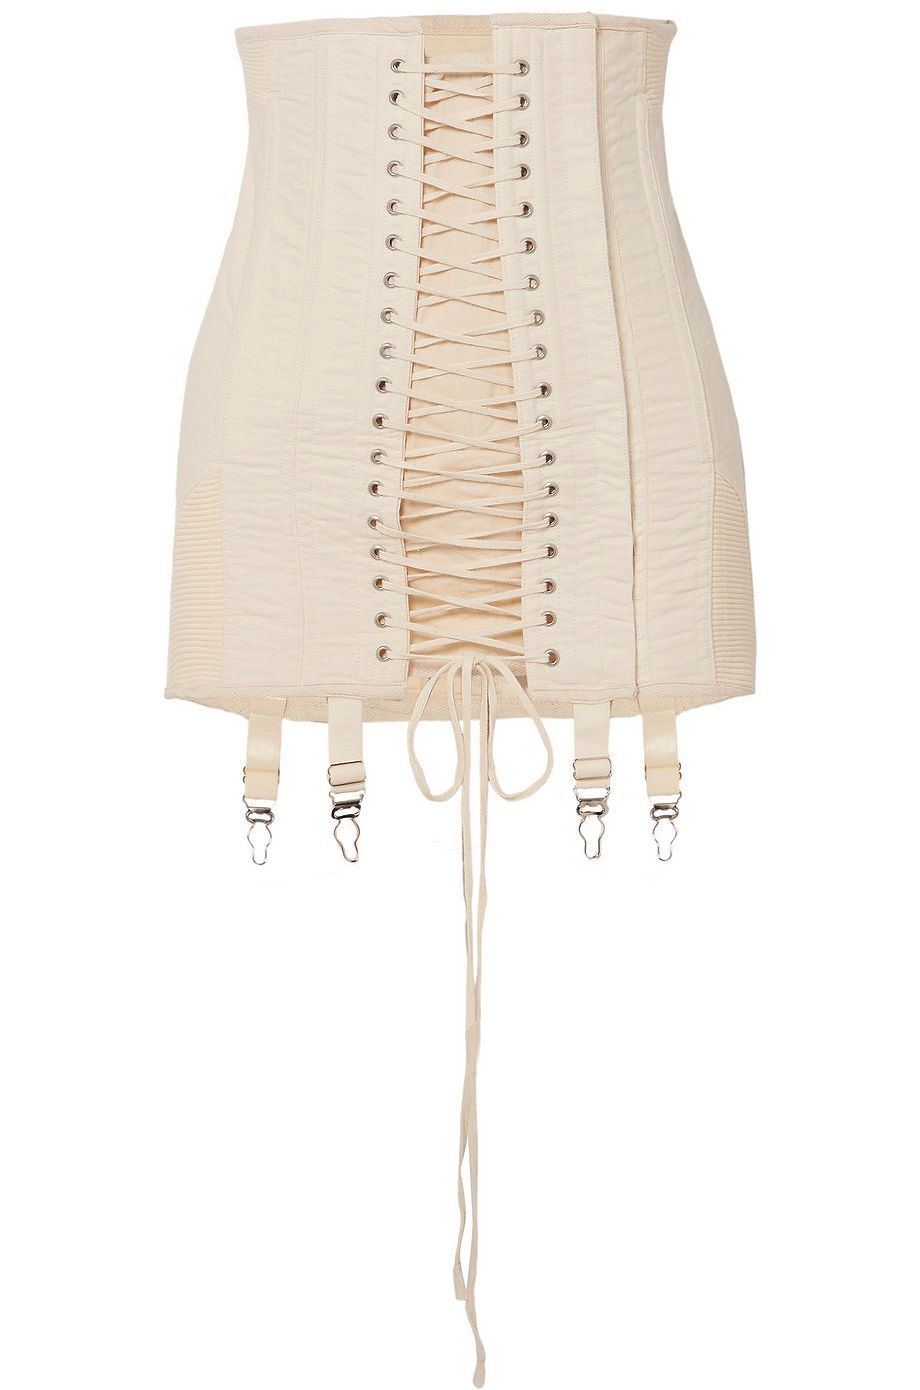 Lace-up Corset Style Mini Skirt